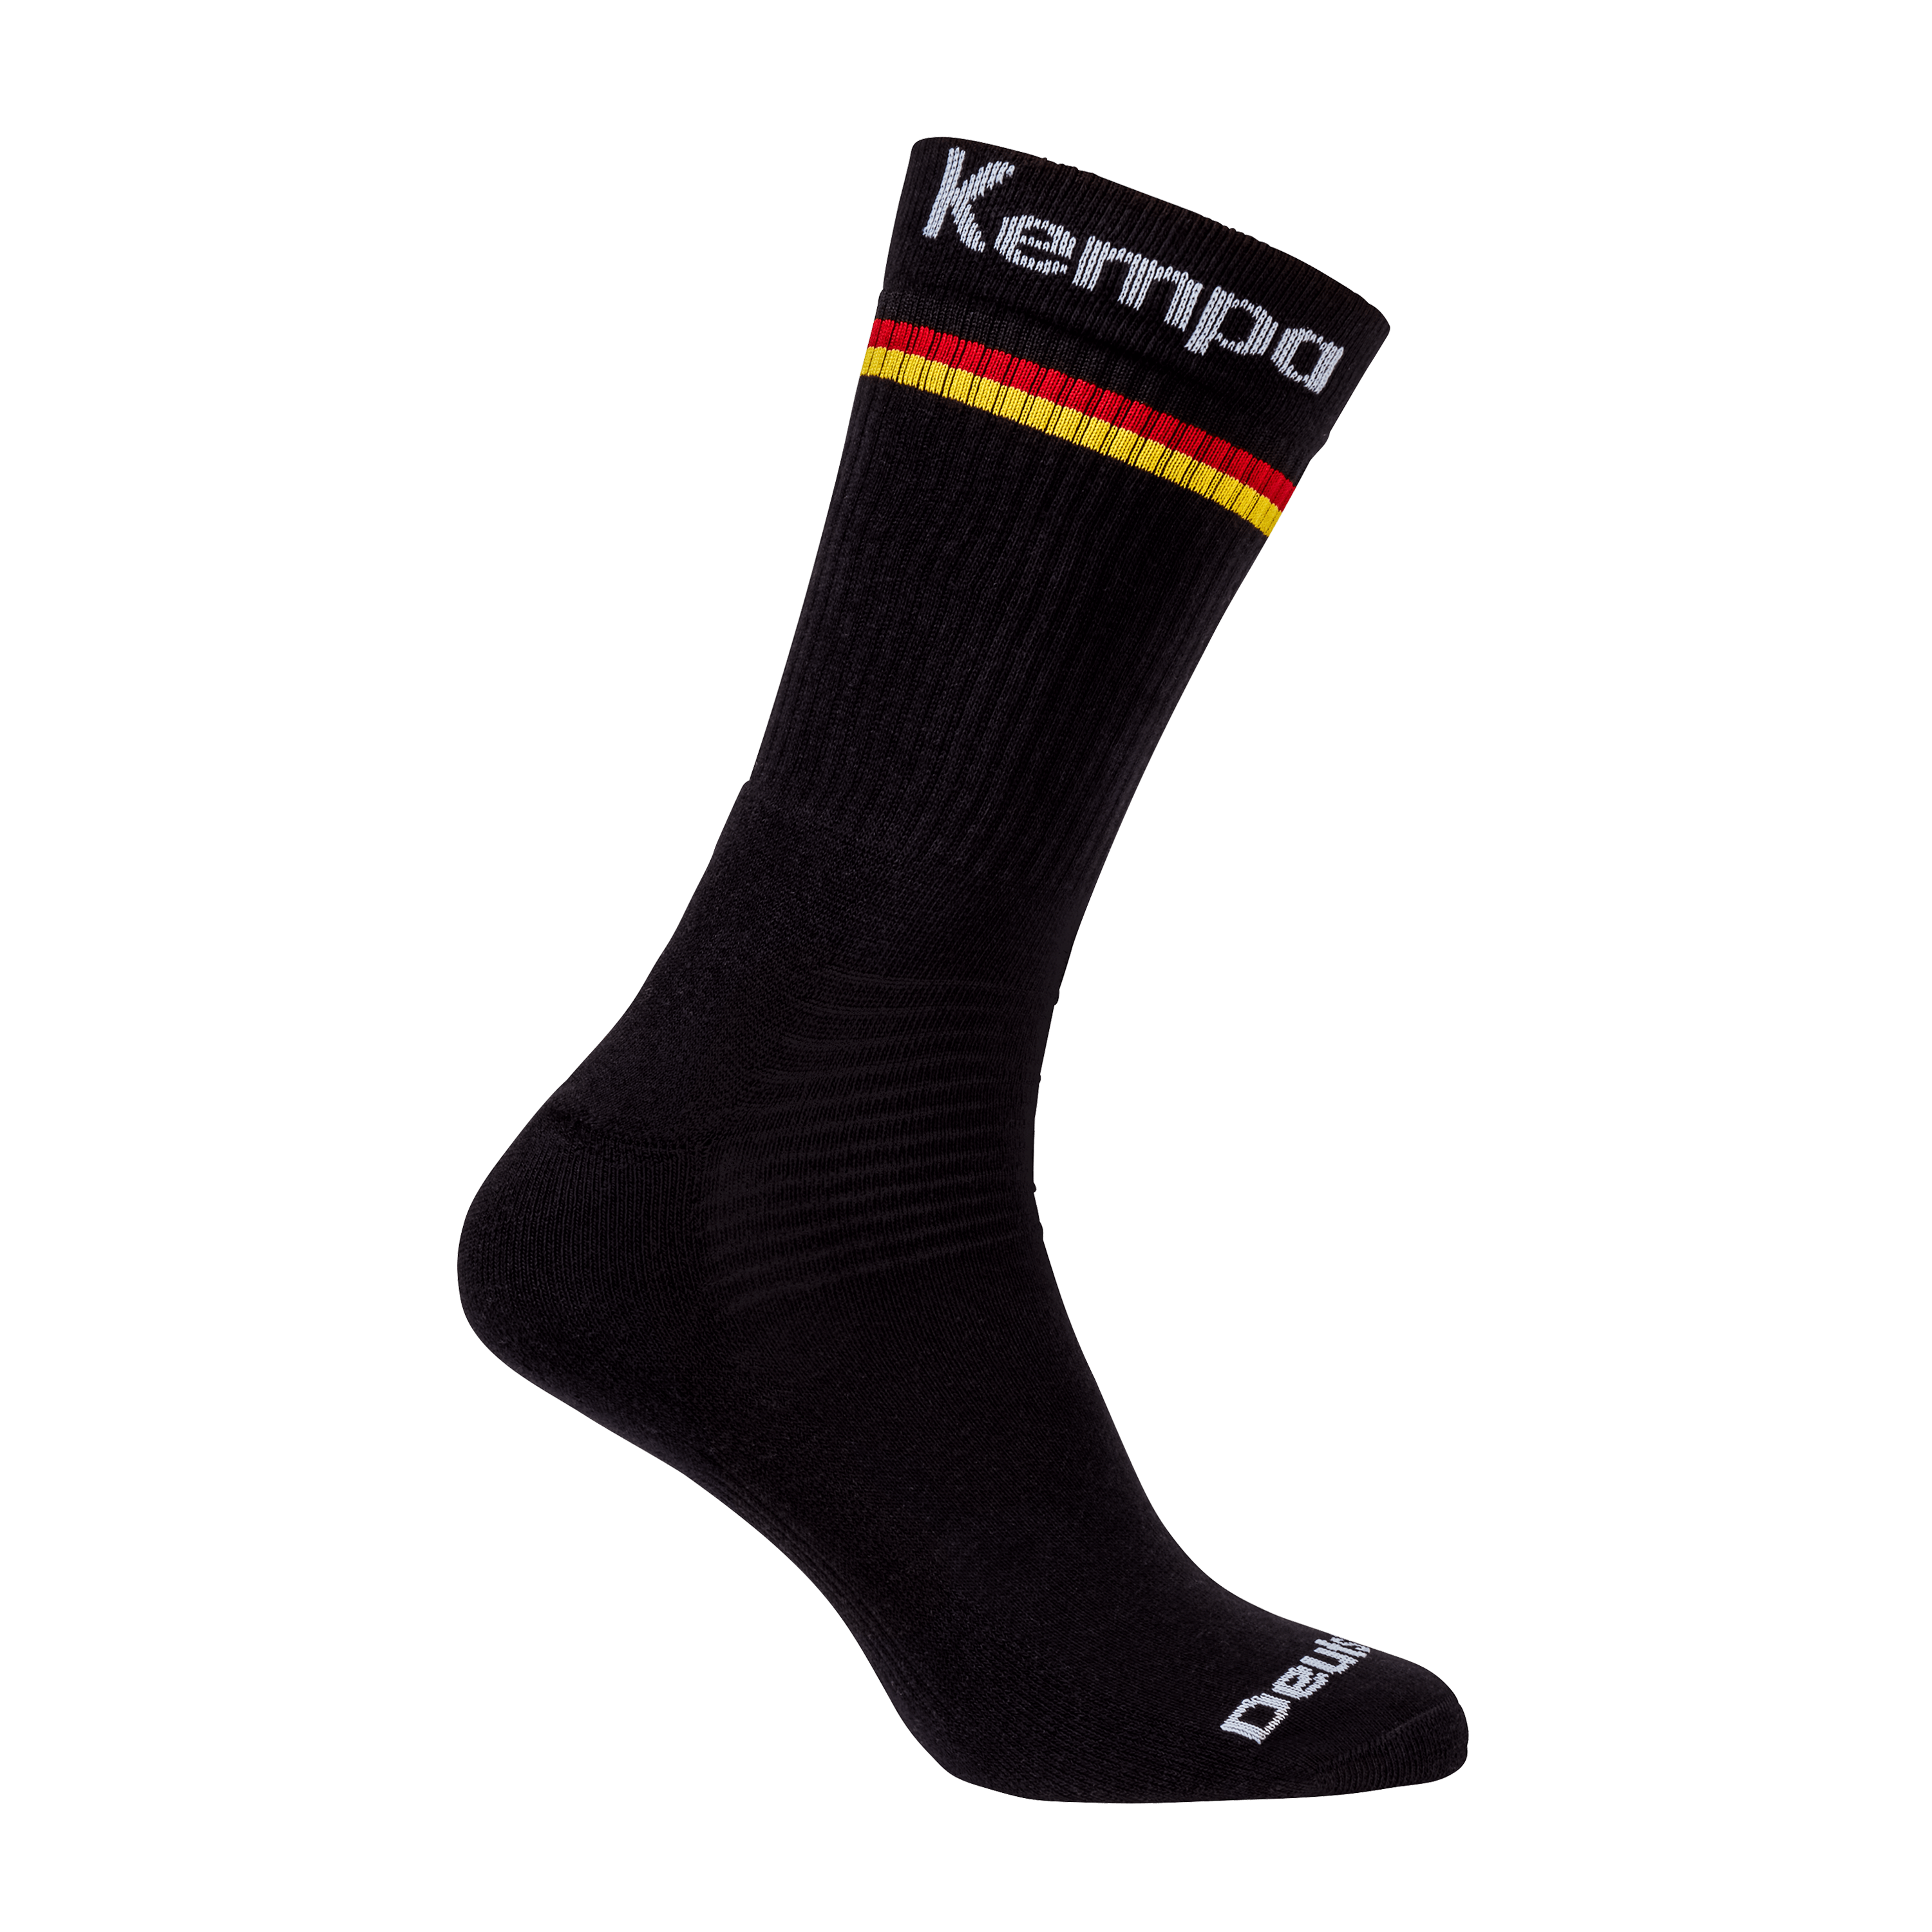 Kempa Socken Team GER schwarz